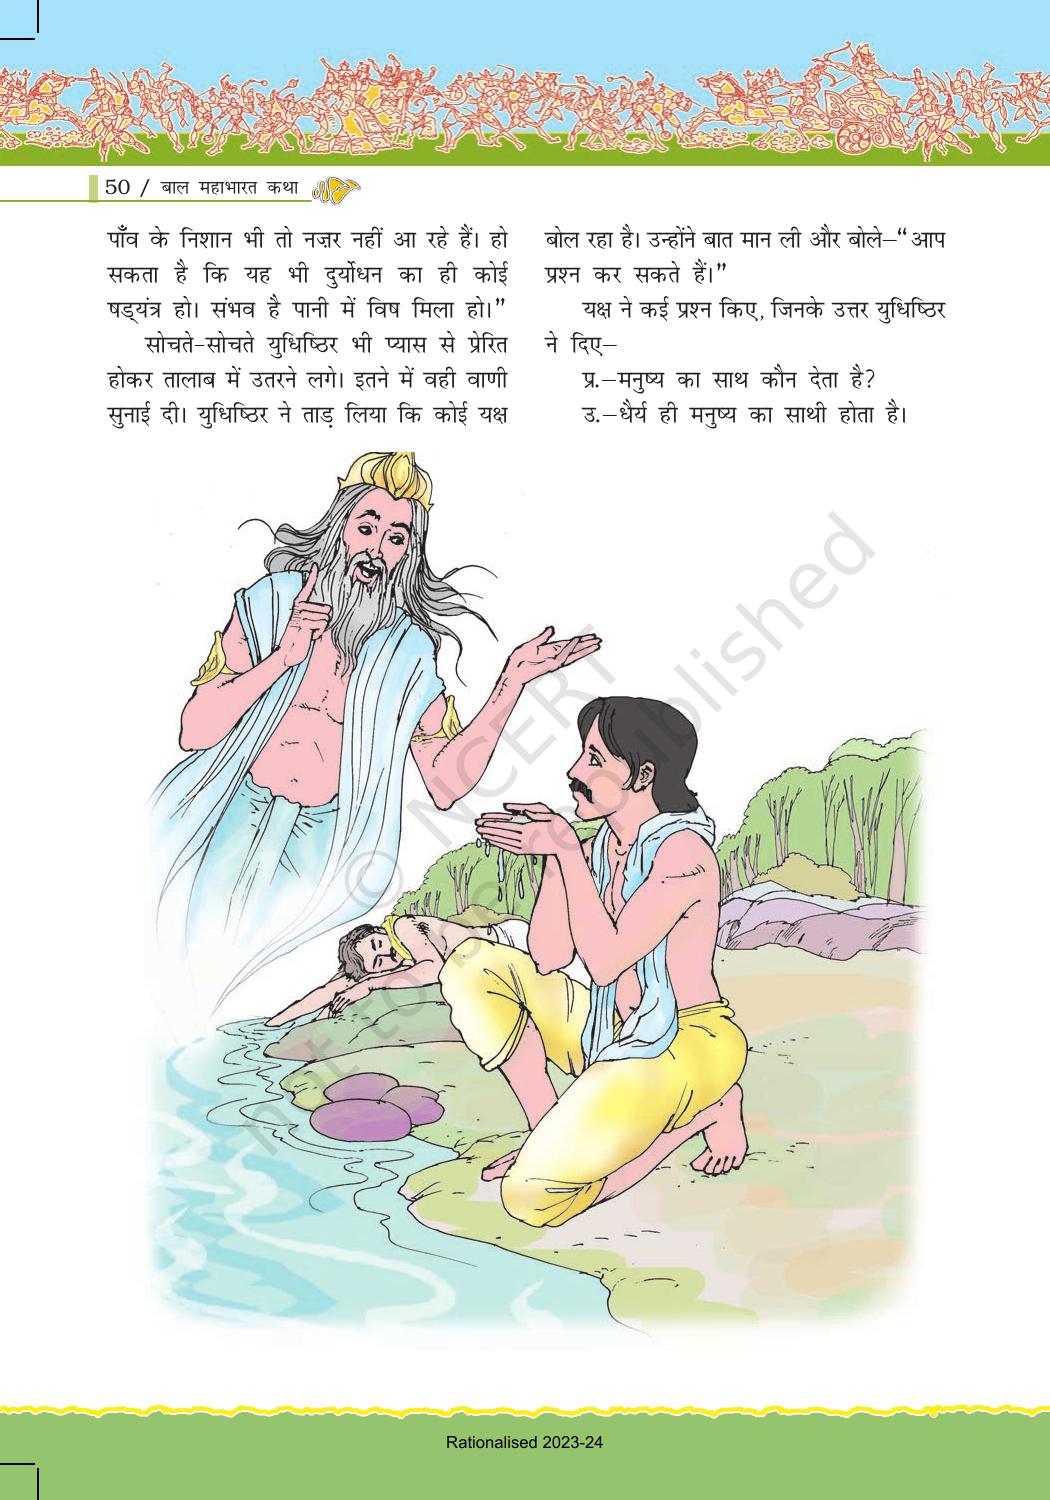 NCERT Book for Class 7 Hindi: Chapter 1-बाल महाभारत कथा - Page 50